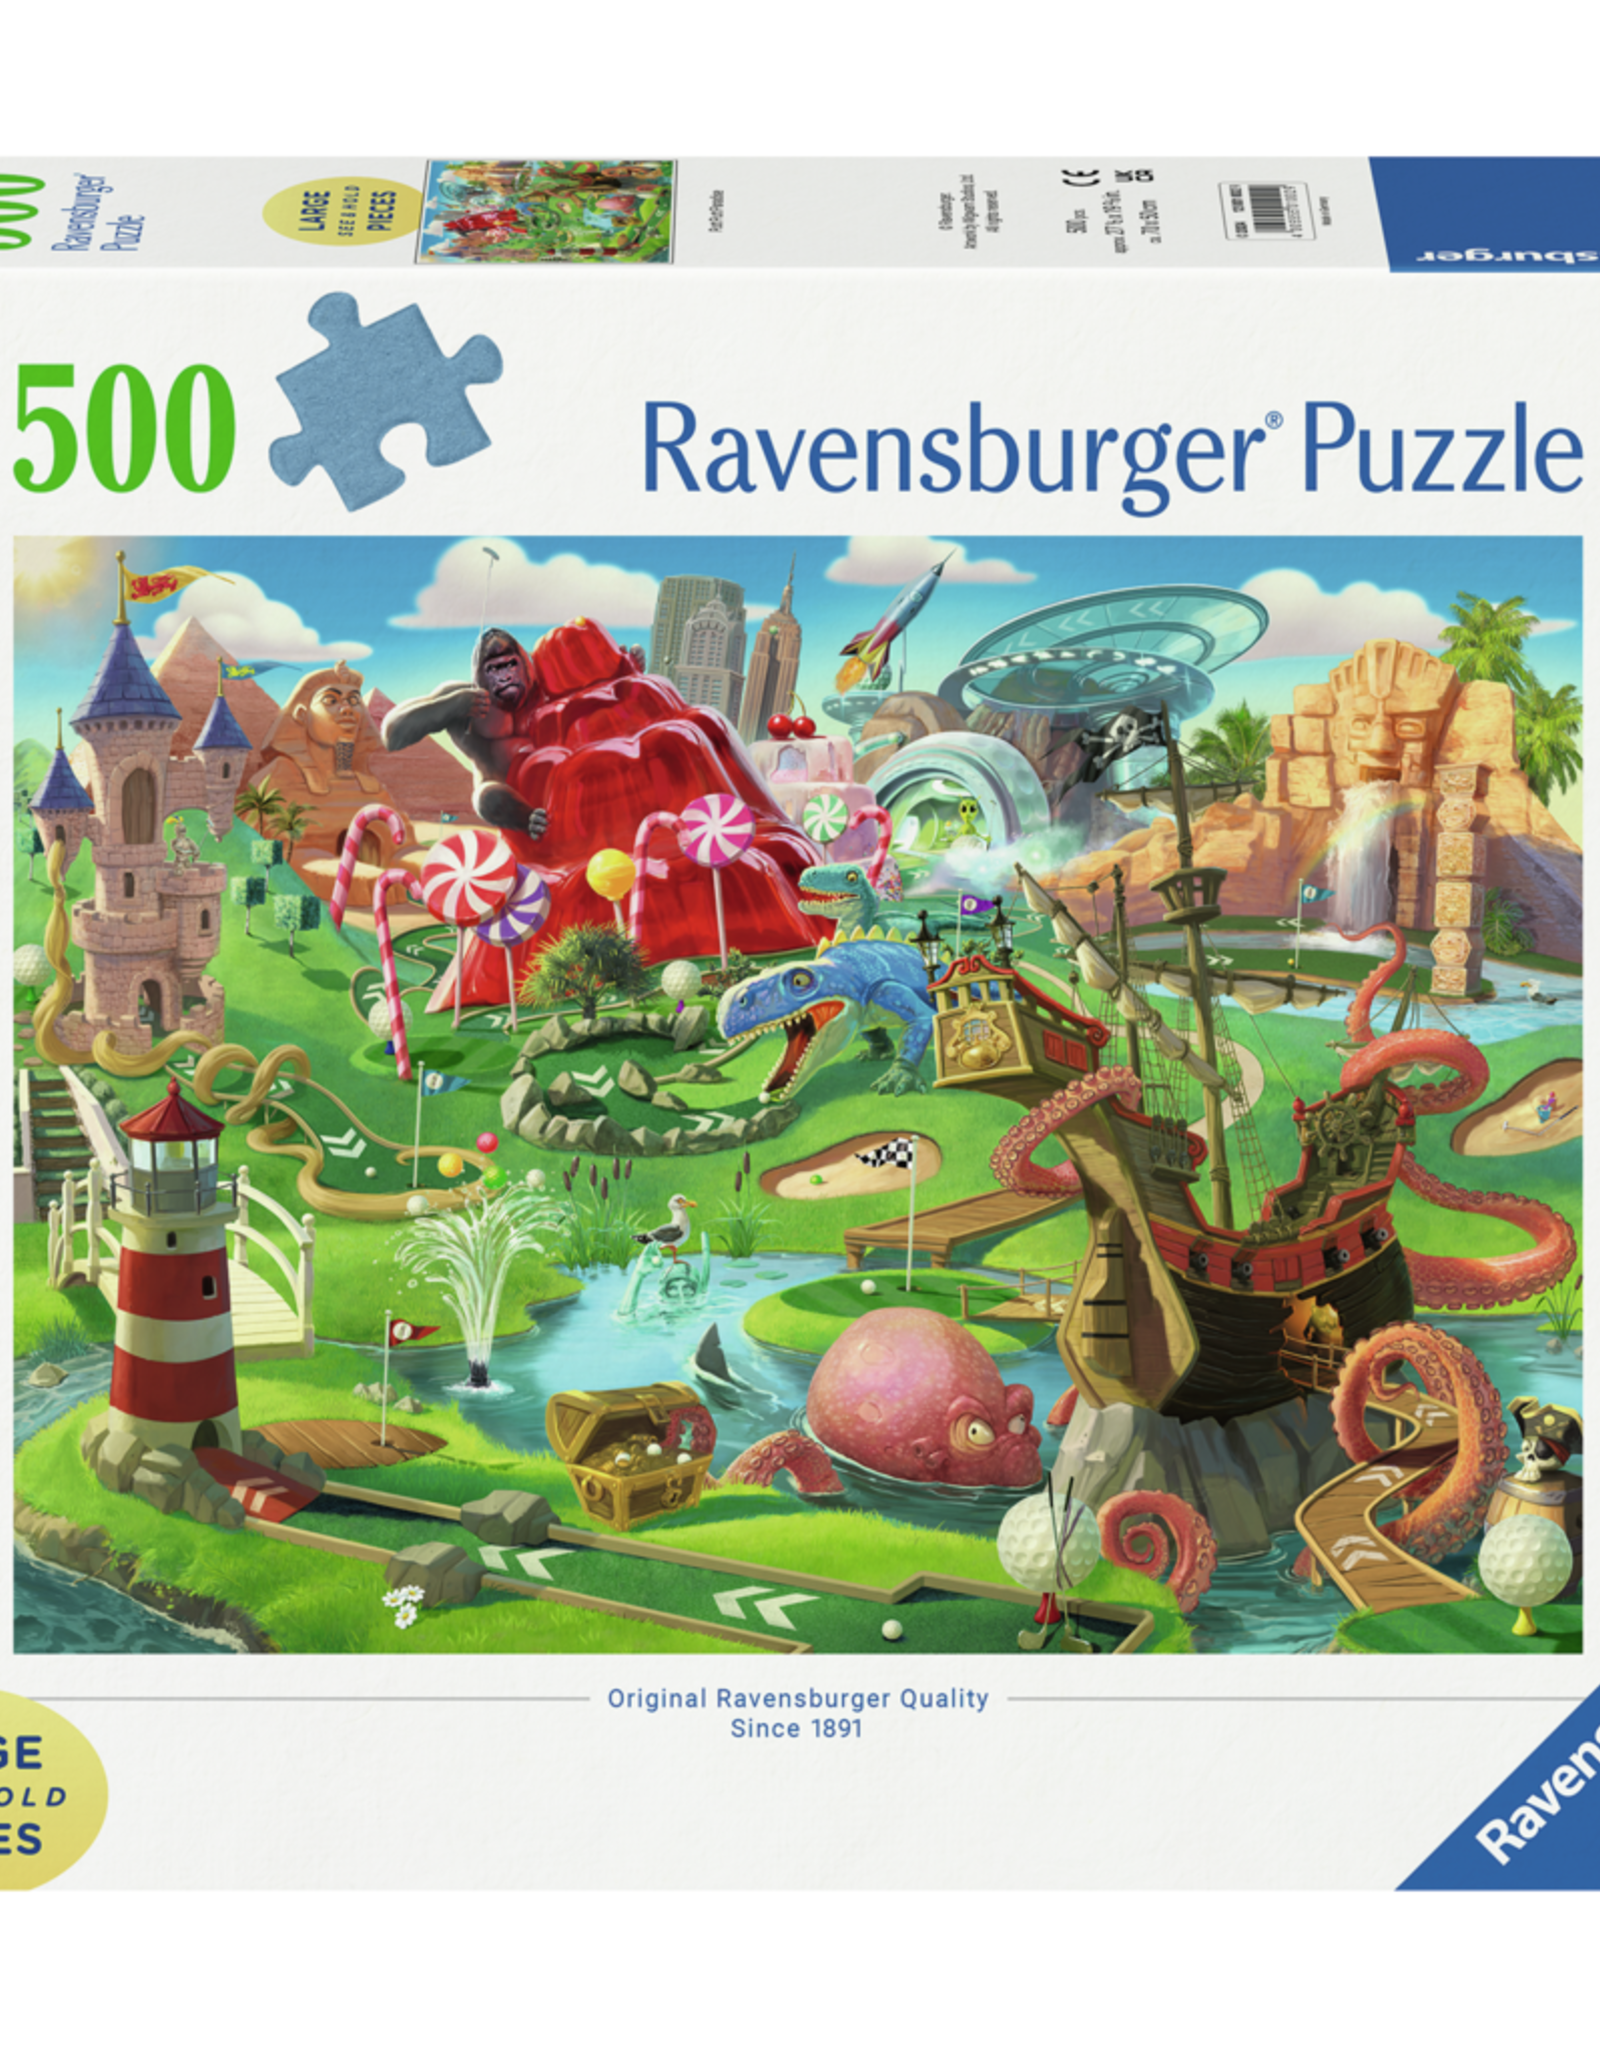 Ravensburger Putt Putt Paradise 500 pc Large Format